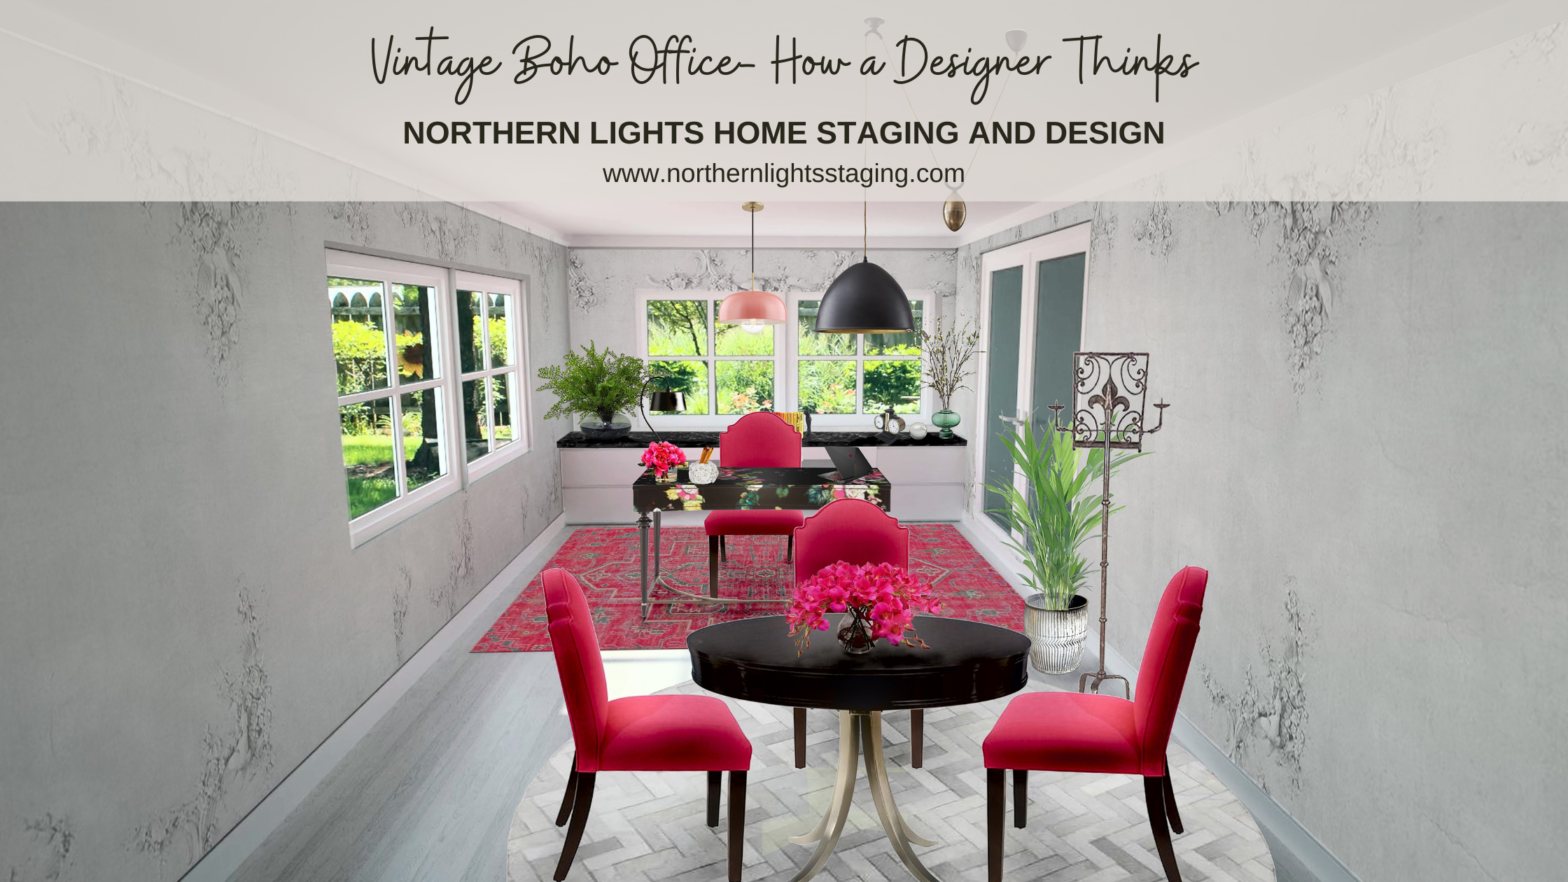 Vintage Boho Office- How a Designer Thinks. Northern Lights Home Staging and Design